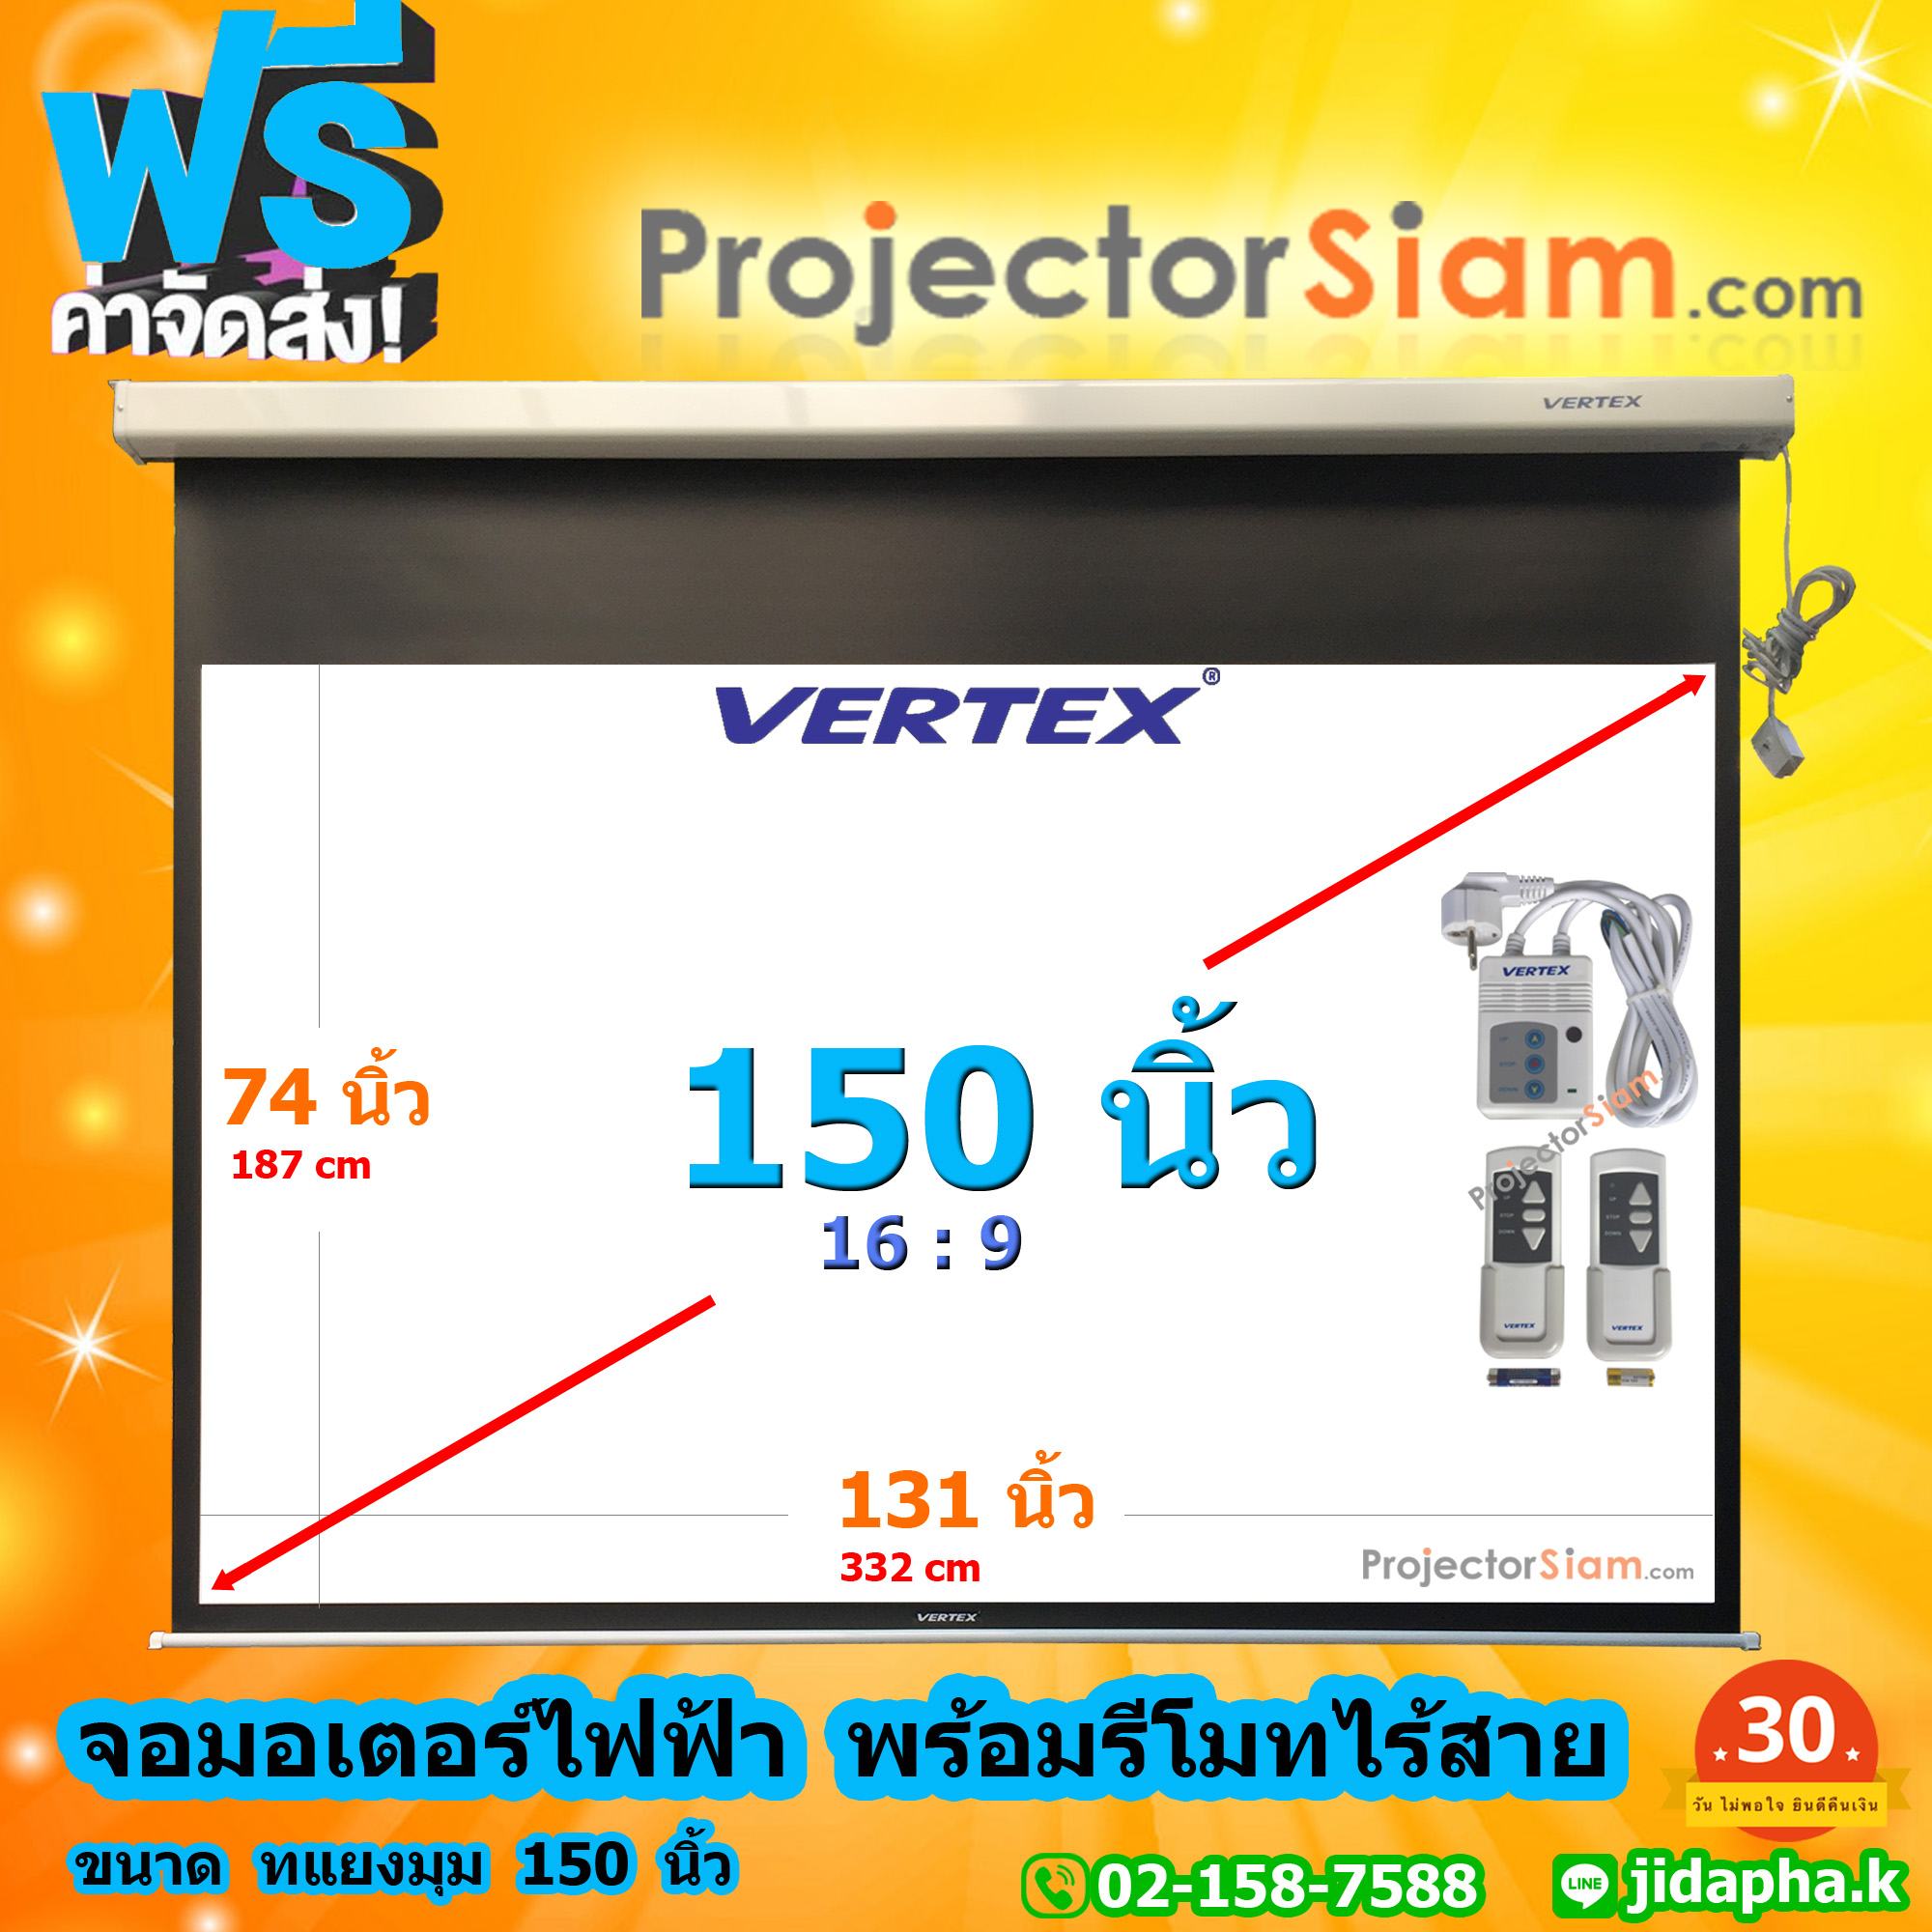 Vertex Motor 150 นิ้ว 16:9 จอโปรเจคเตอร์ screen projector จอมอเตอร์ไฟฟ้า (188 x 335 cm) (74 x 132 inch) พร้อมชุดรีโมทคอนโทรล